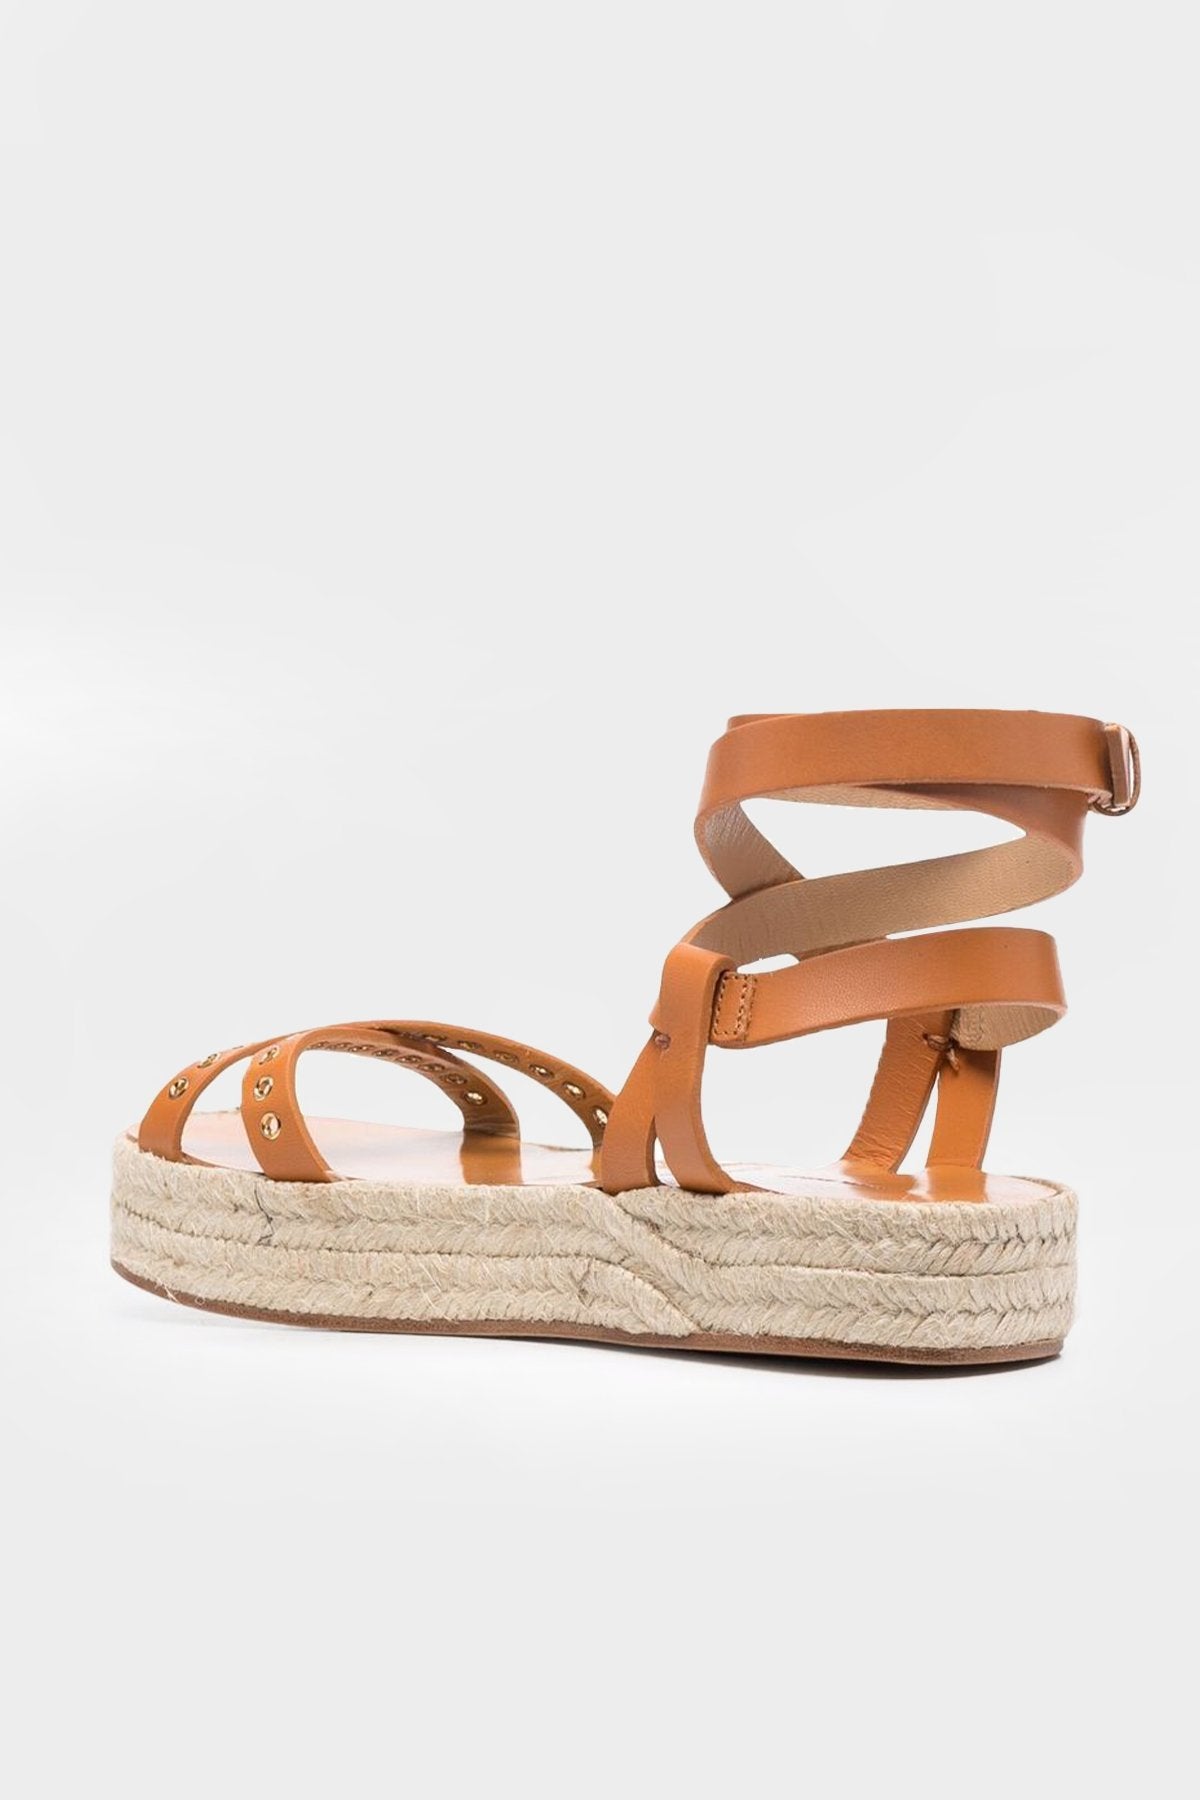 Melyz Sandals in Natural - shop-olivia.com